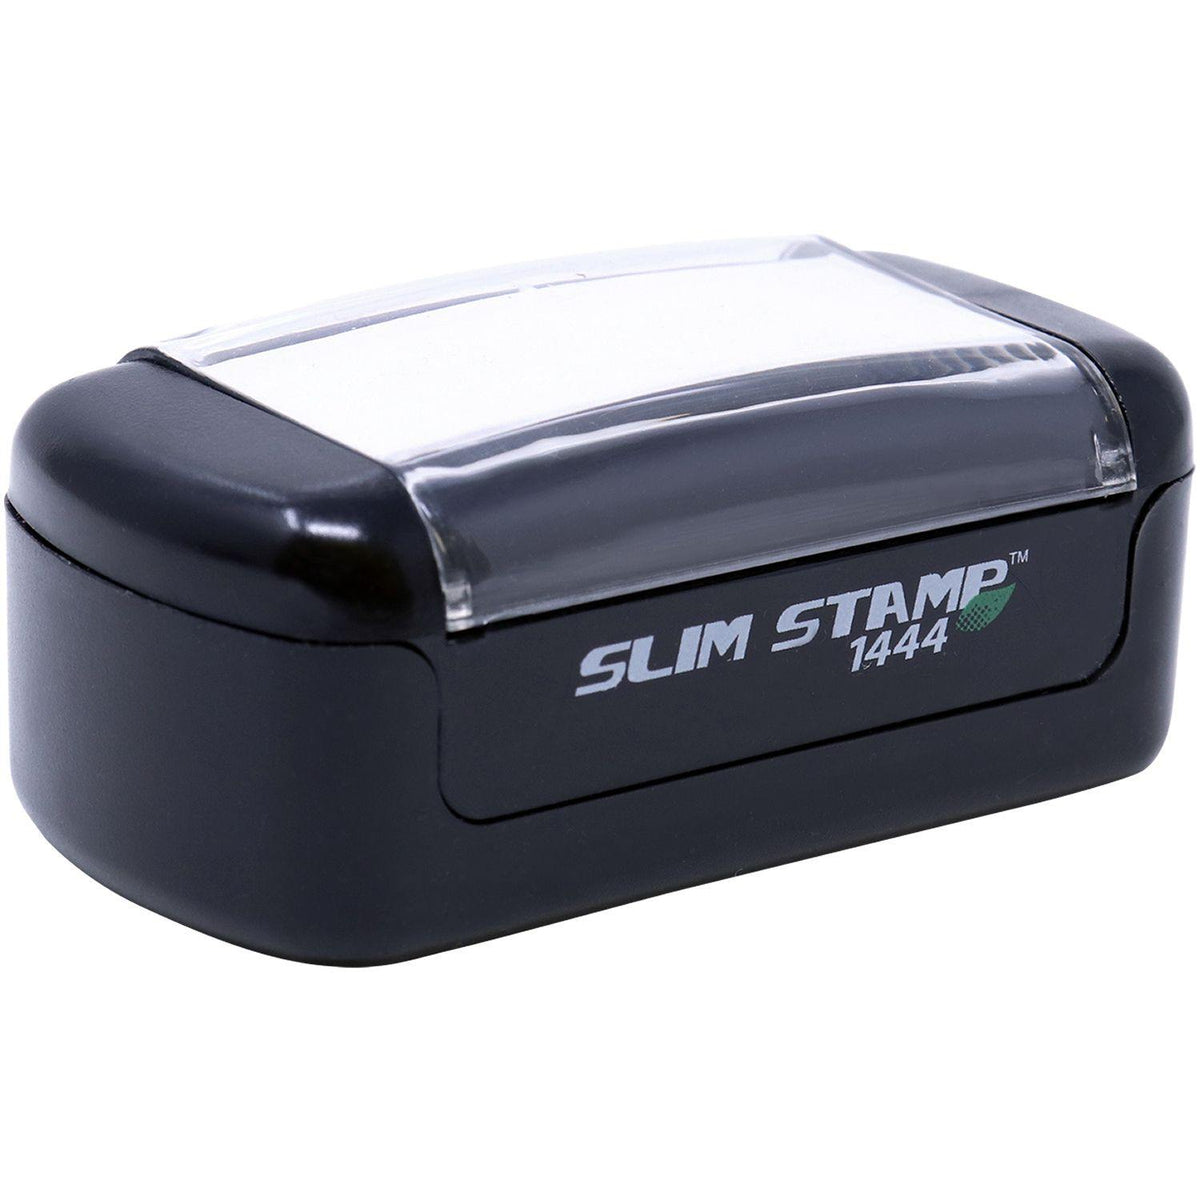 Alt View of Slim Pre Inked Chrono Stamp Mount Angle